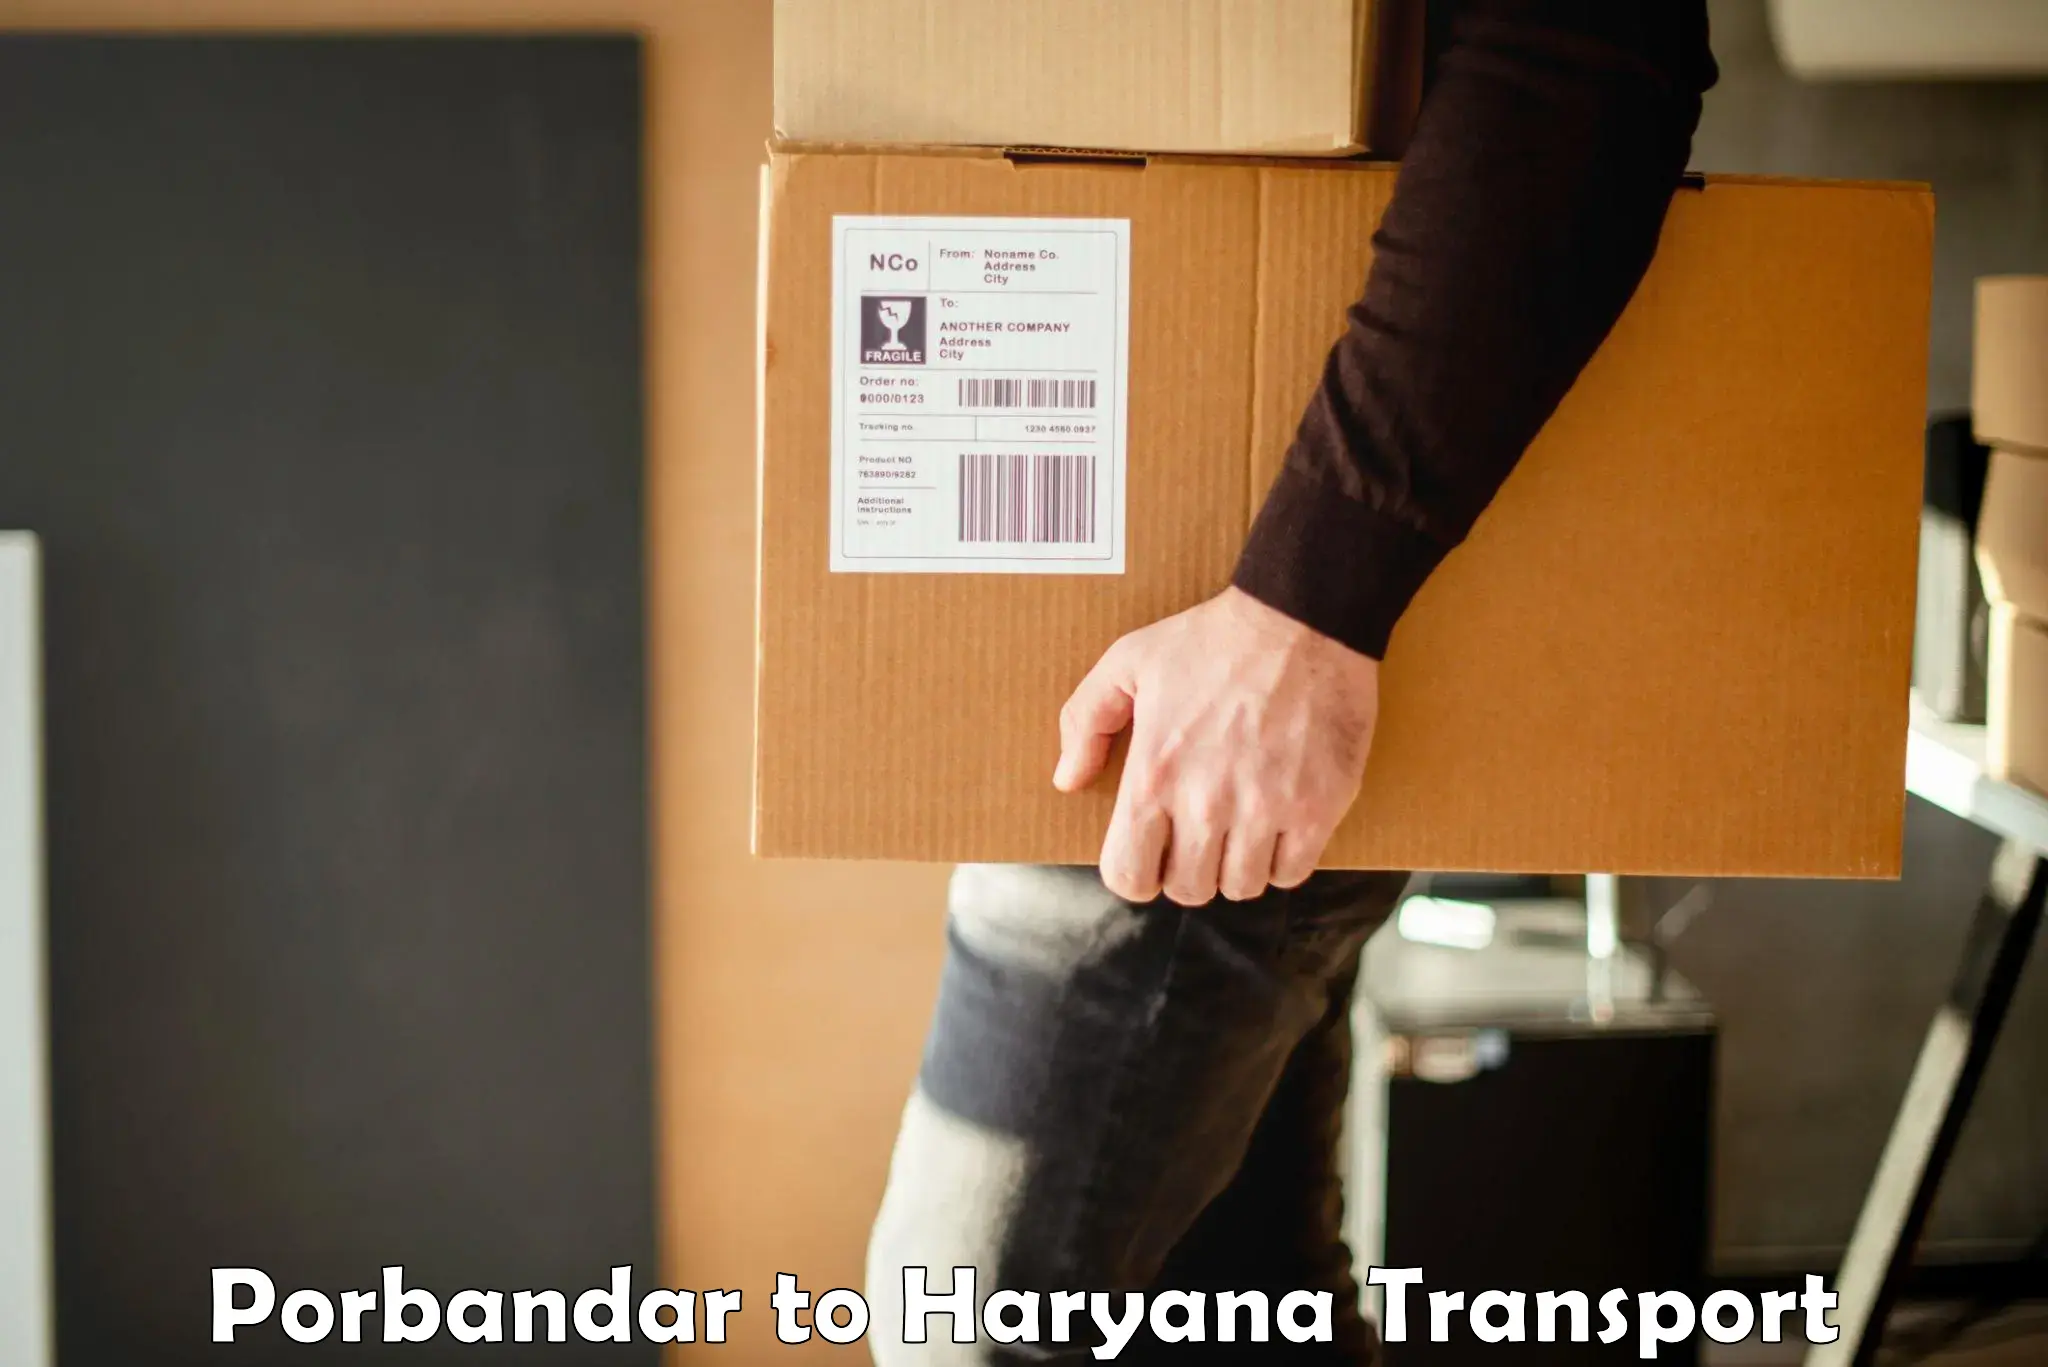 Truck transport companies in India Porbandar to Hisar